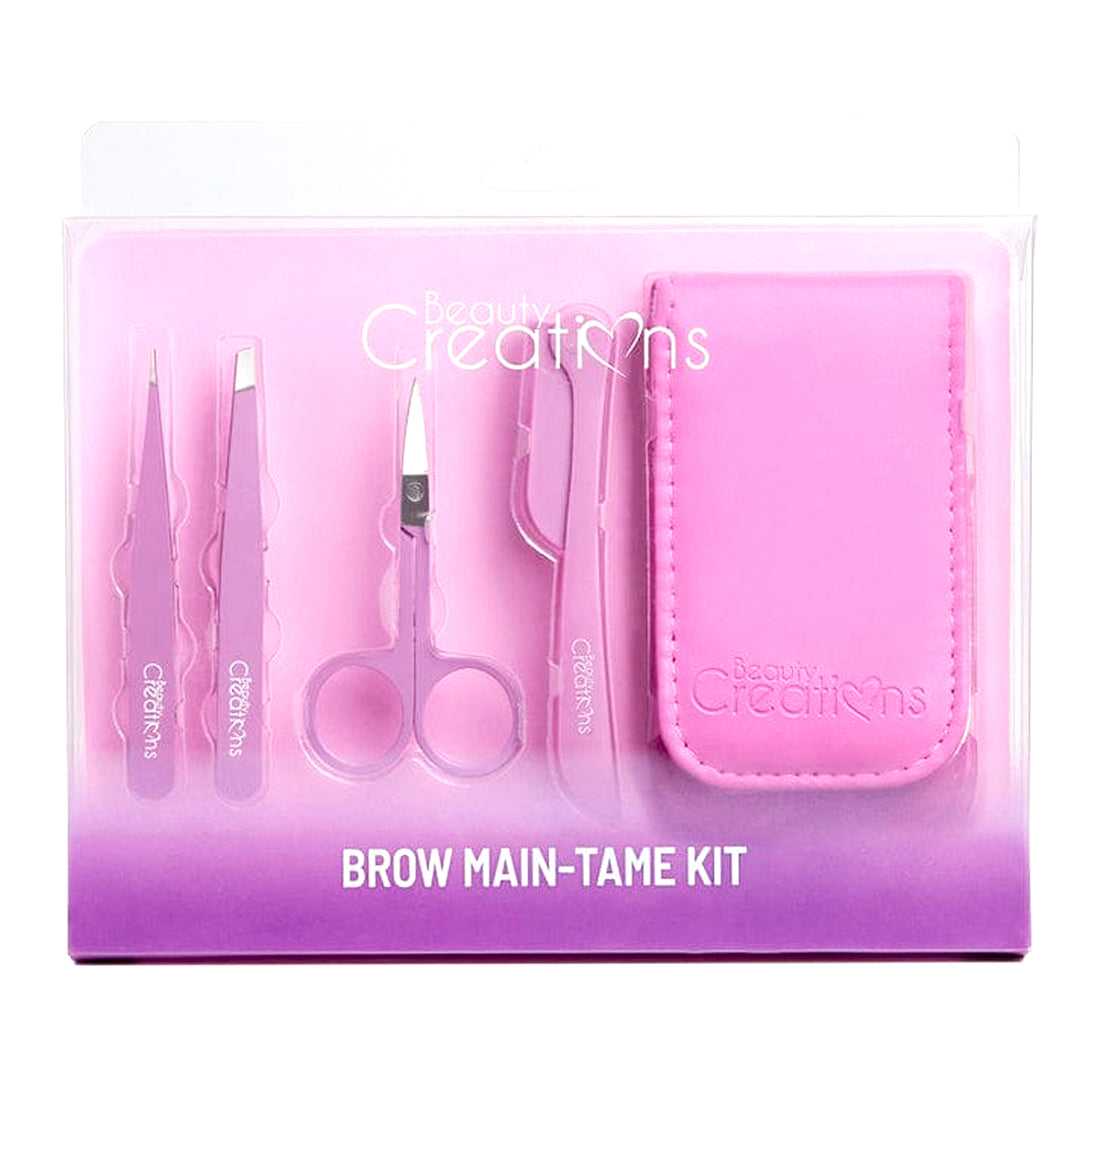 Brow Main-Tame Kit